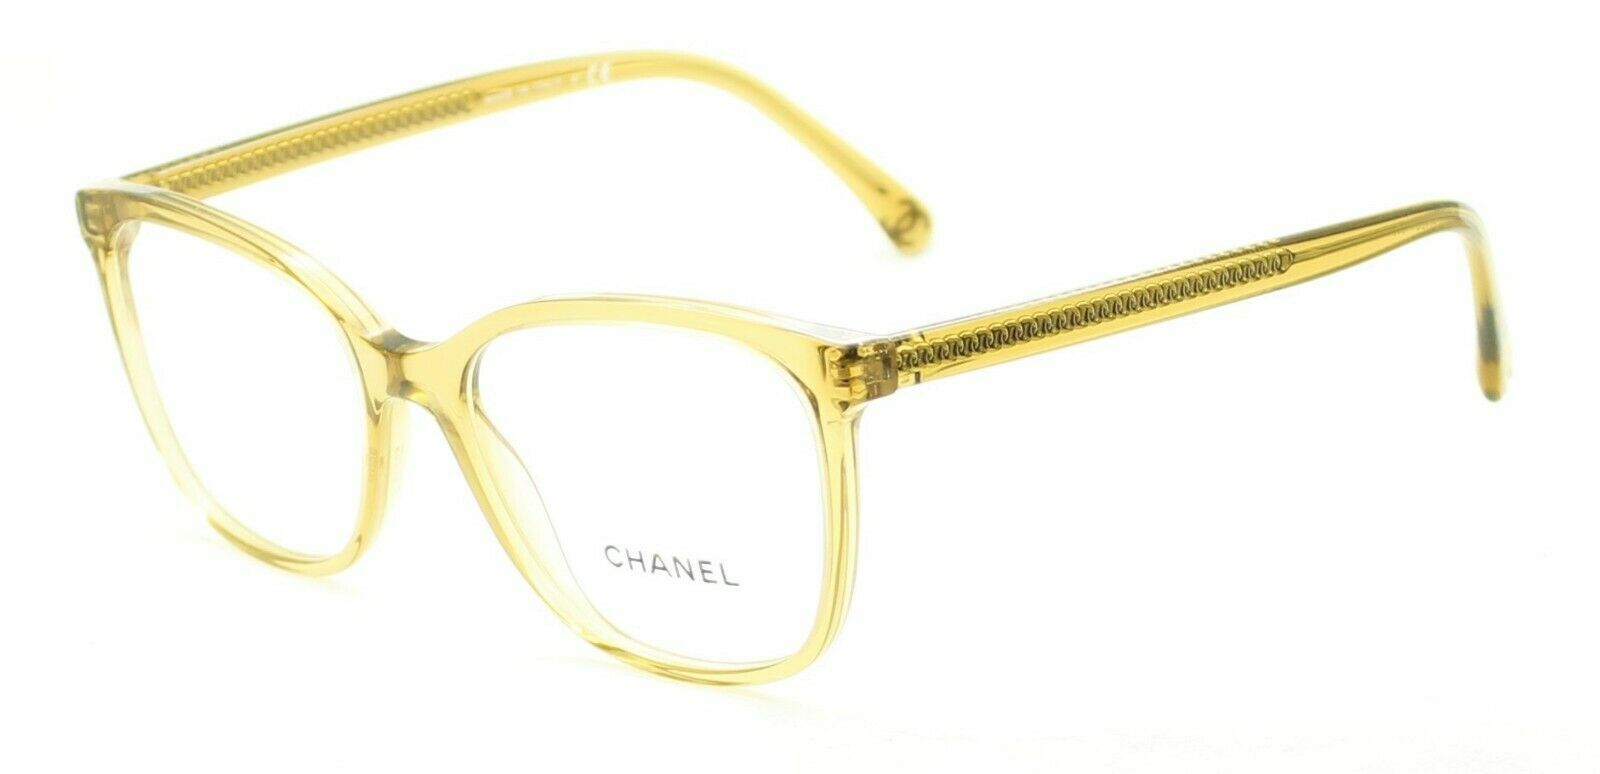 CHANEL 3384 c.1090 Eyewear 52mm FRAMES Eyeglasses RX Optical Glasses New -  Italy - GGV Eyewear